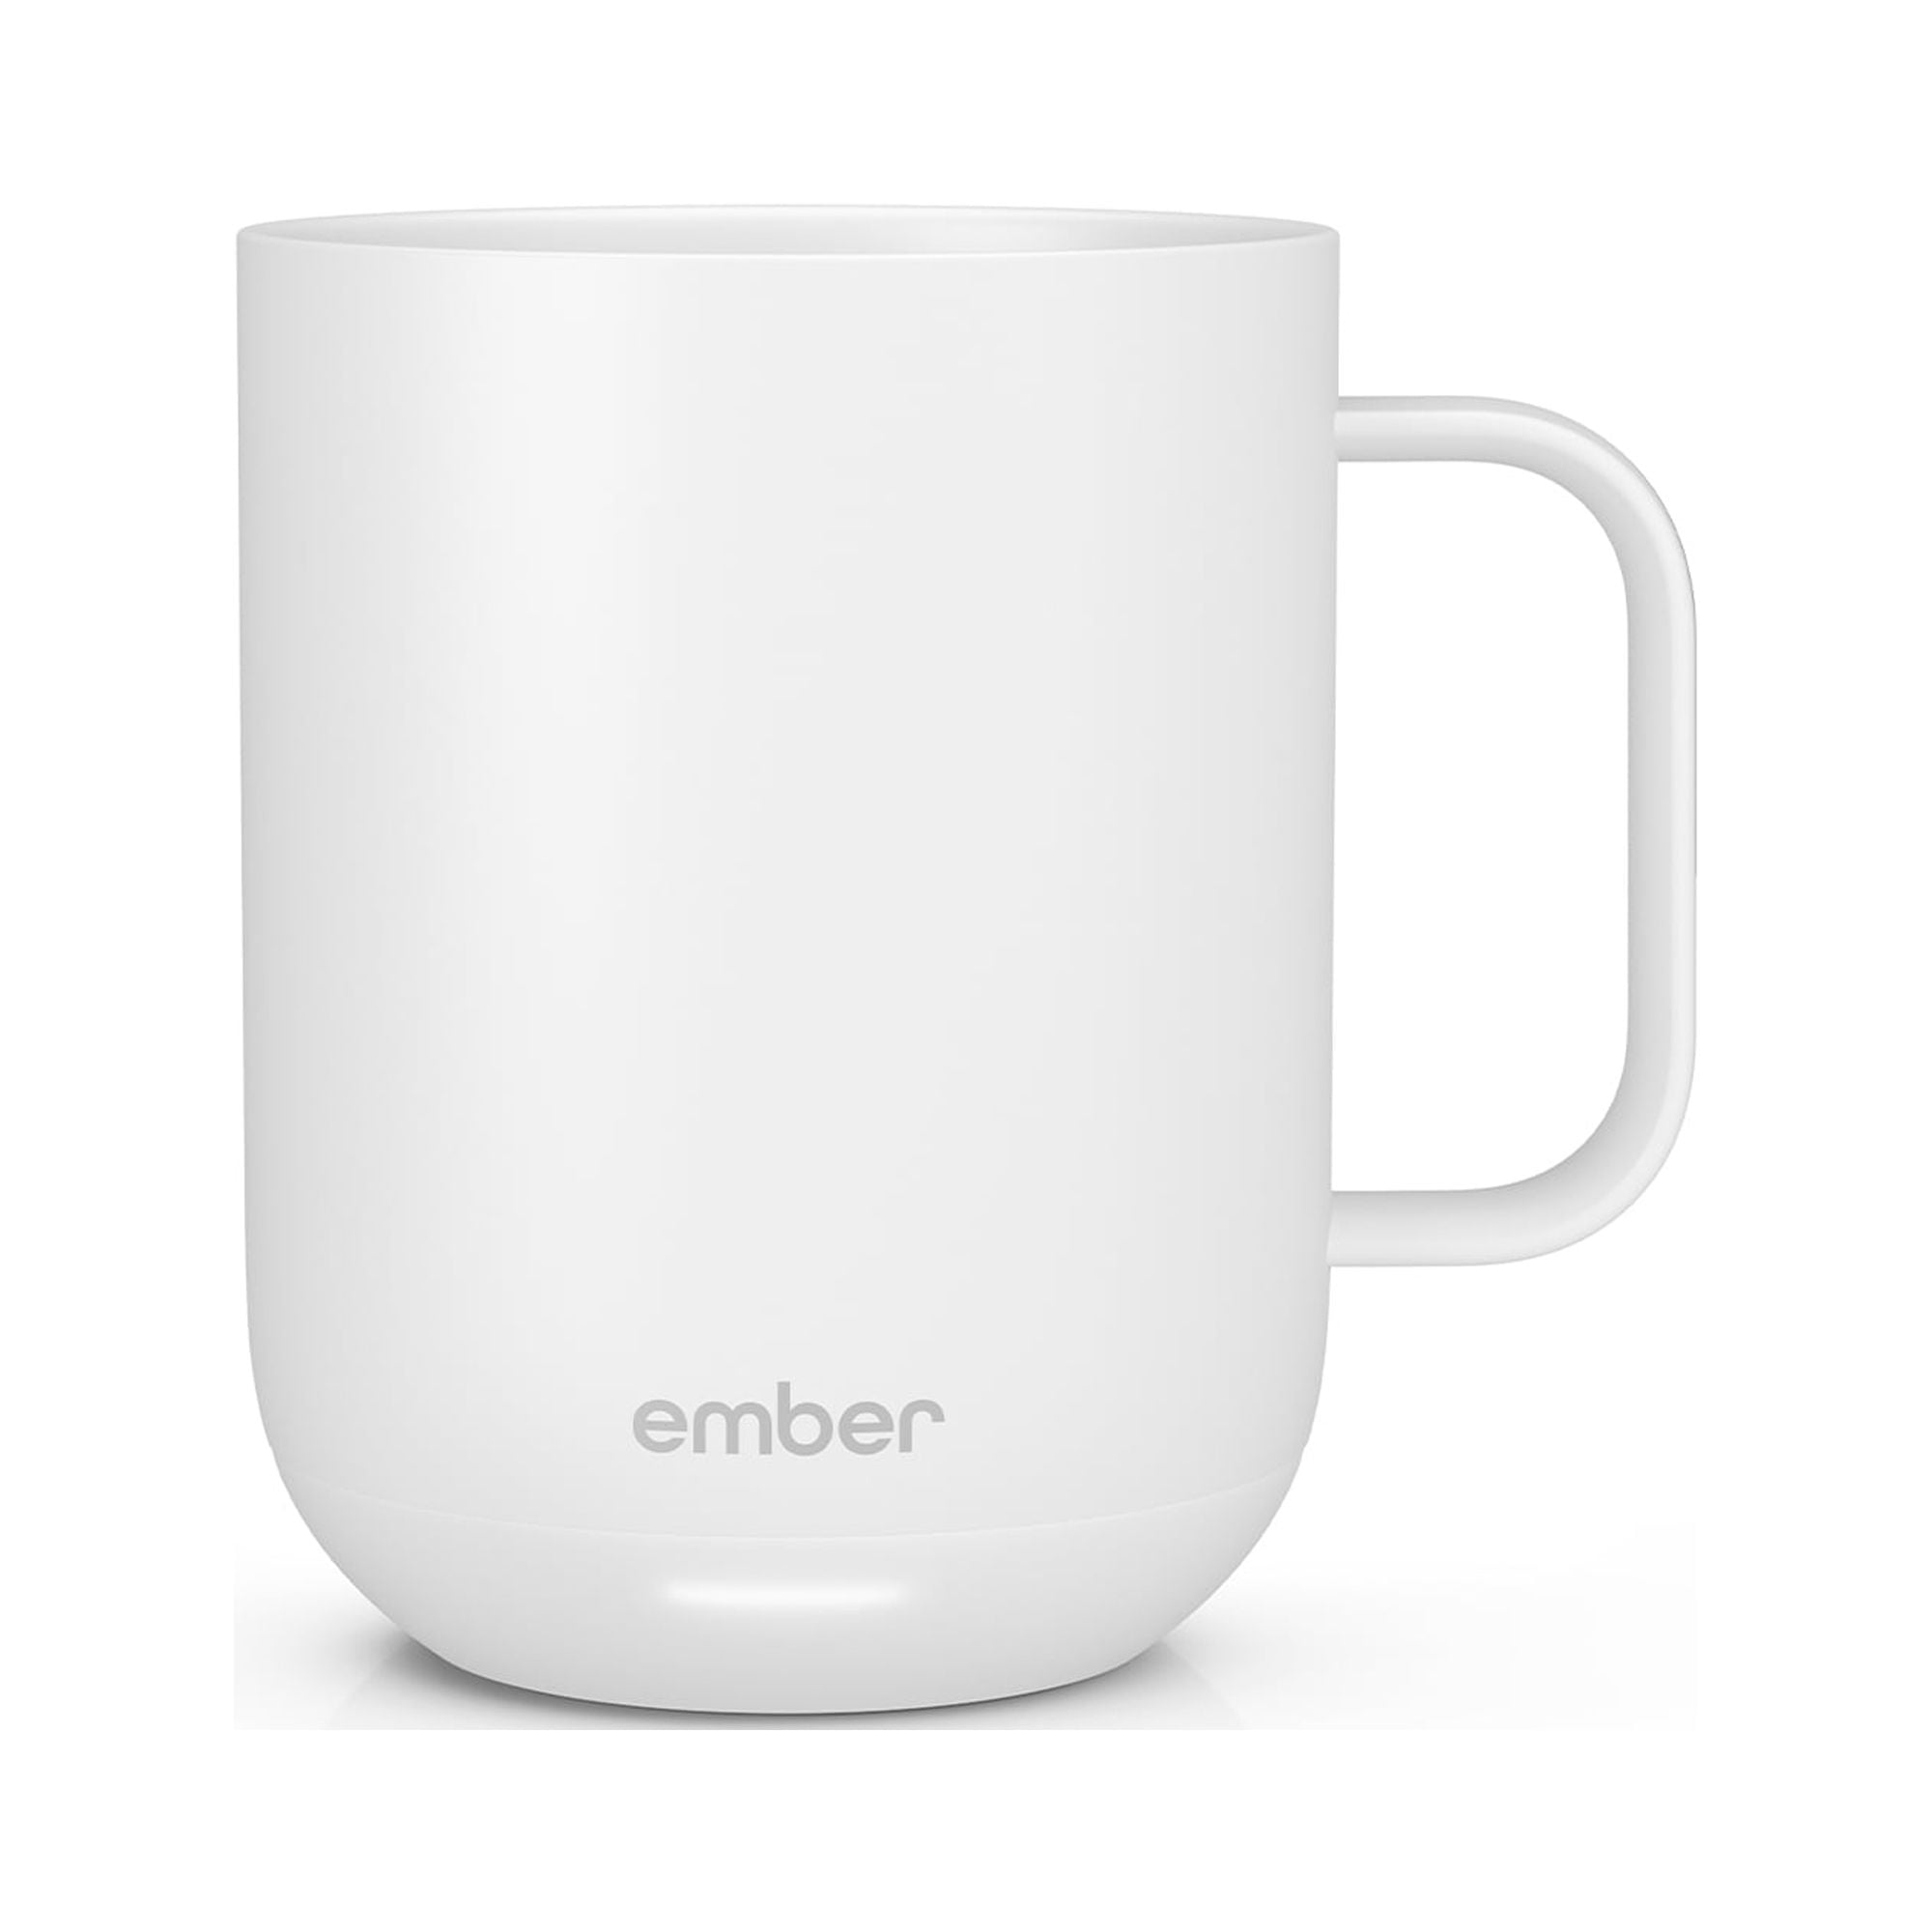 Ember Temperature Controlled Ceramic Mug, White, 10 oz